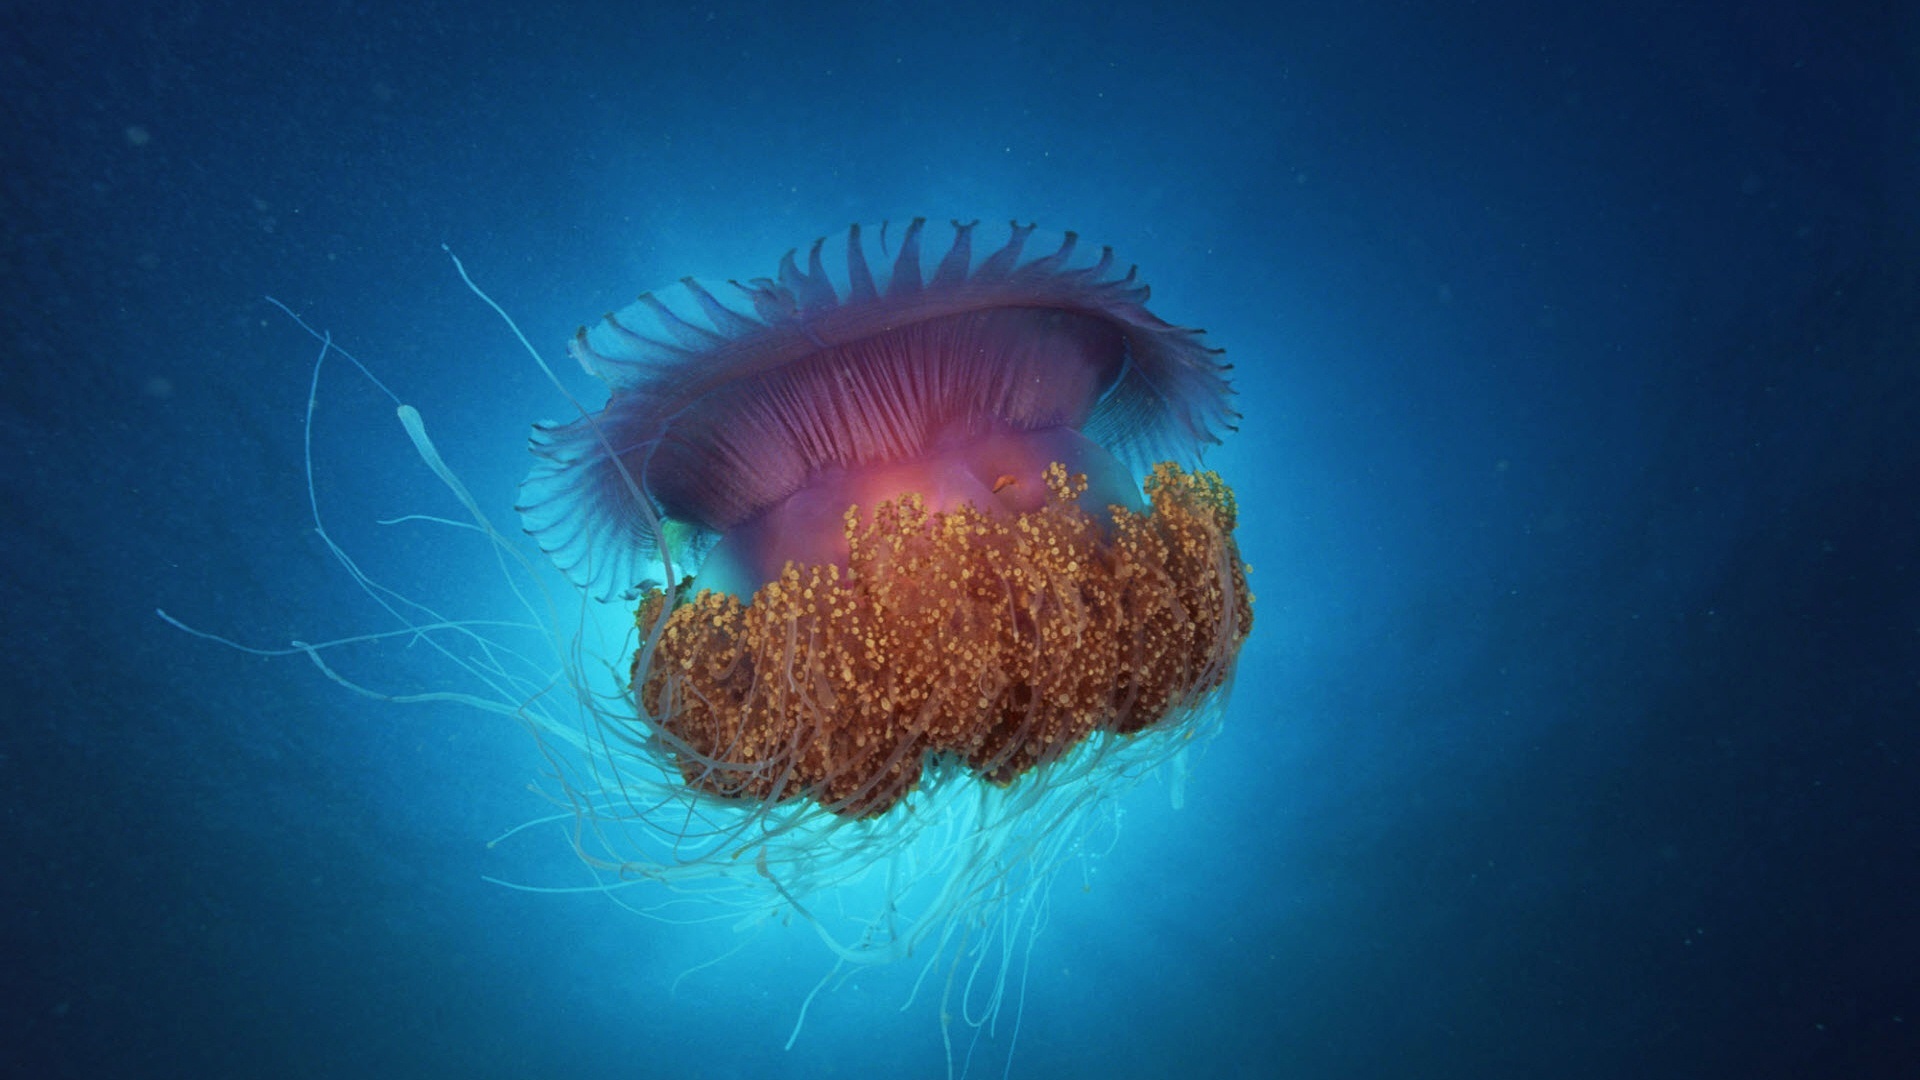 jellyfish under sea animal wallpaper | Desktop Backgrounds for ...